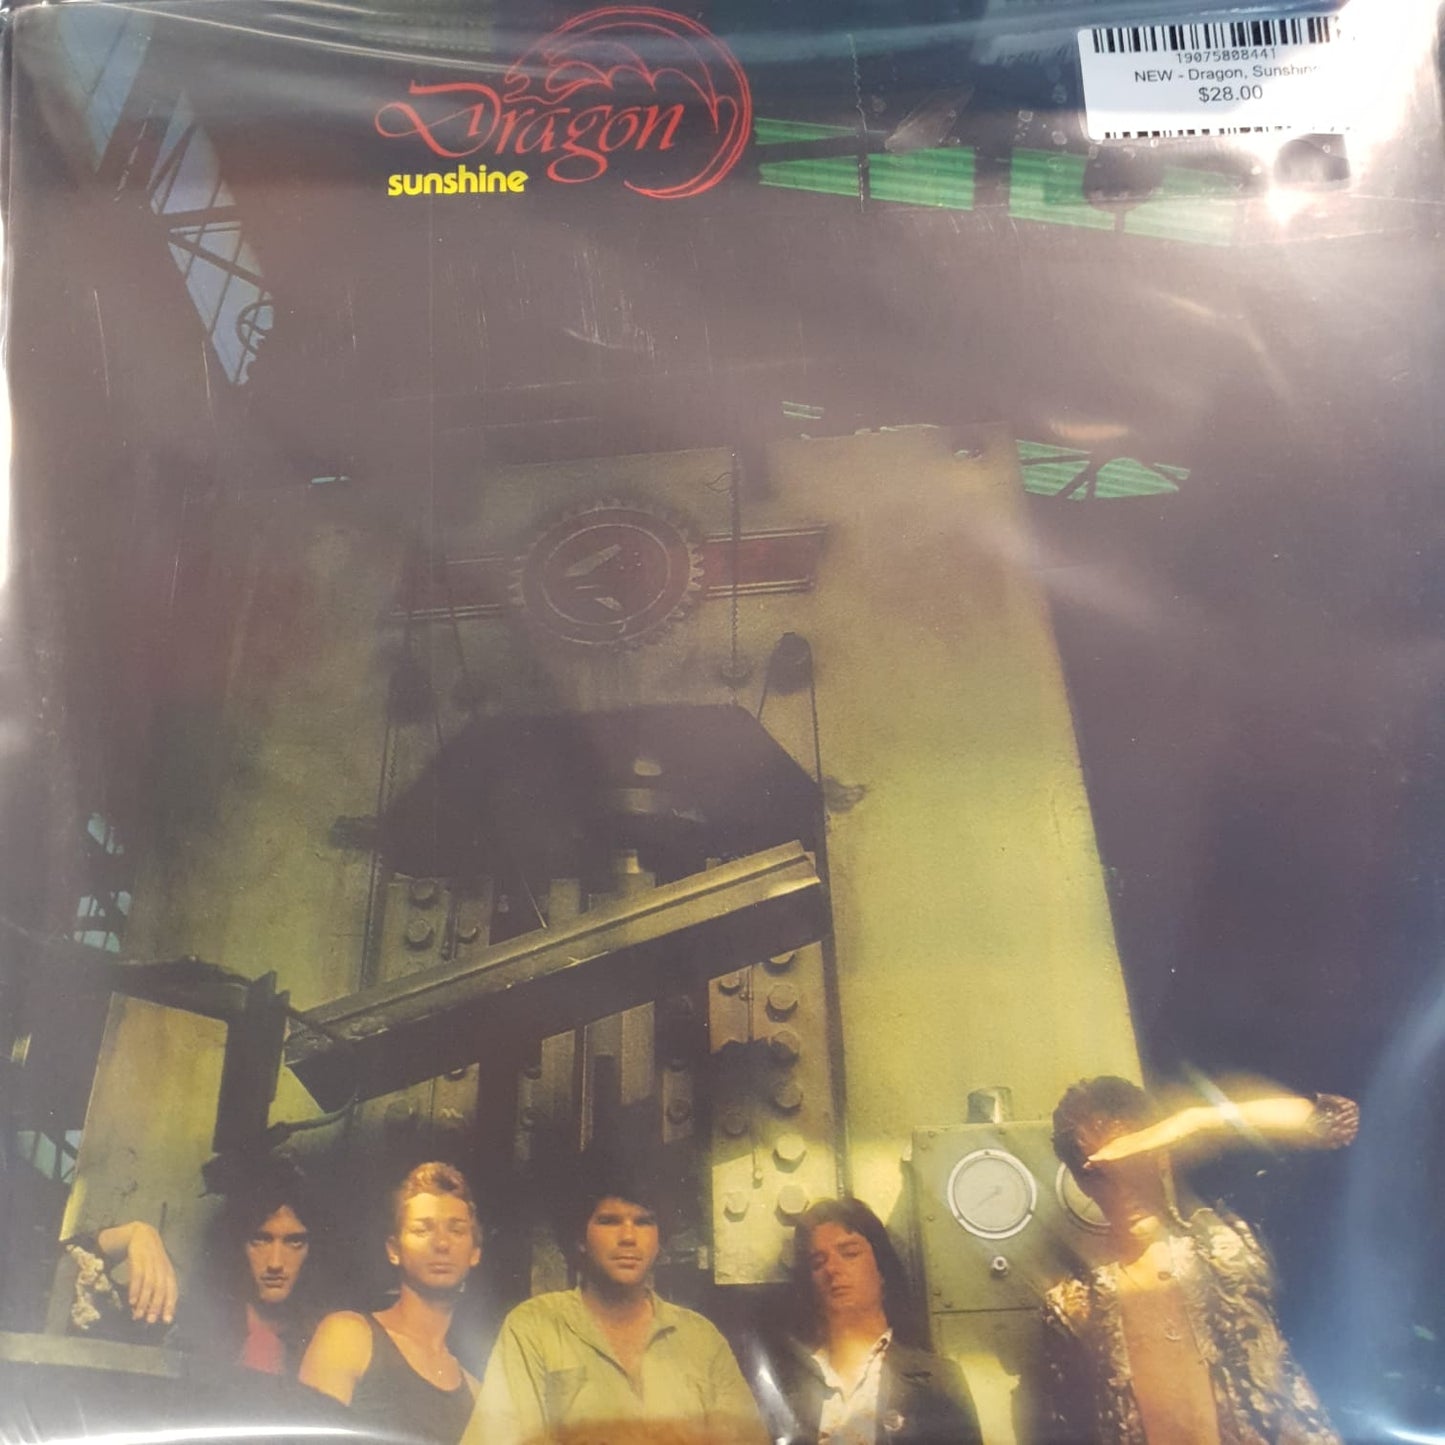 NEW - Dragon, Sunshine RSD Re-issue Vinyl